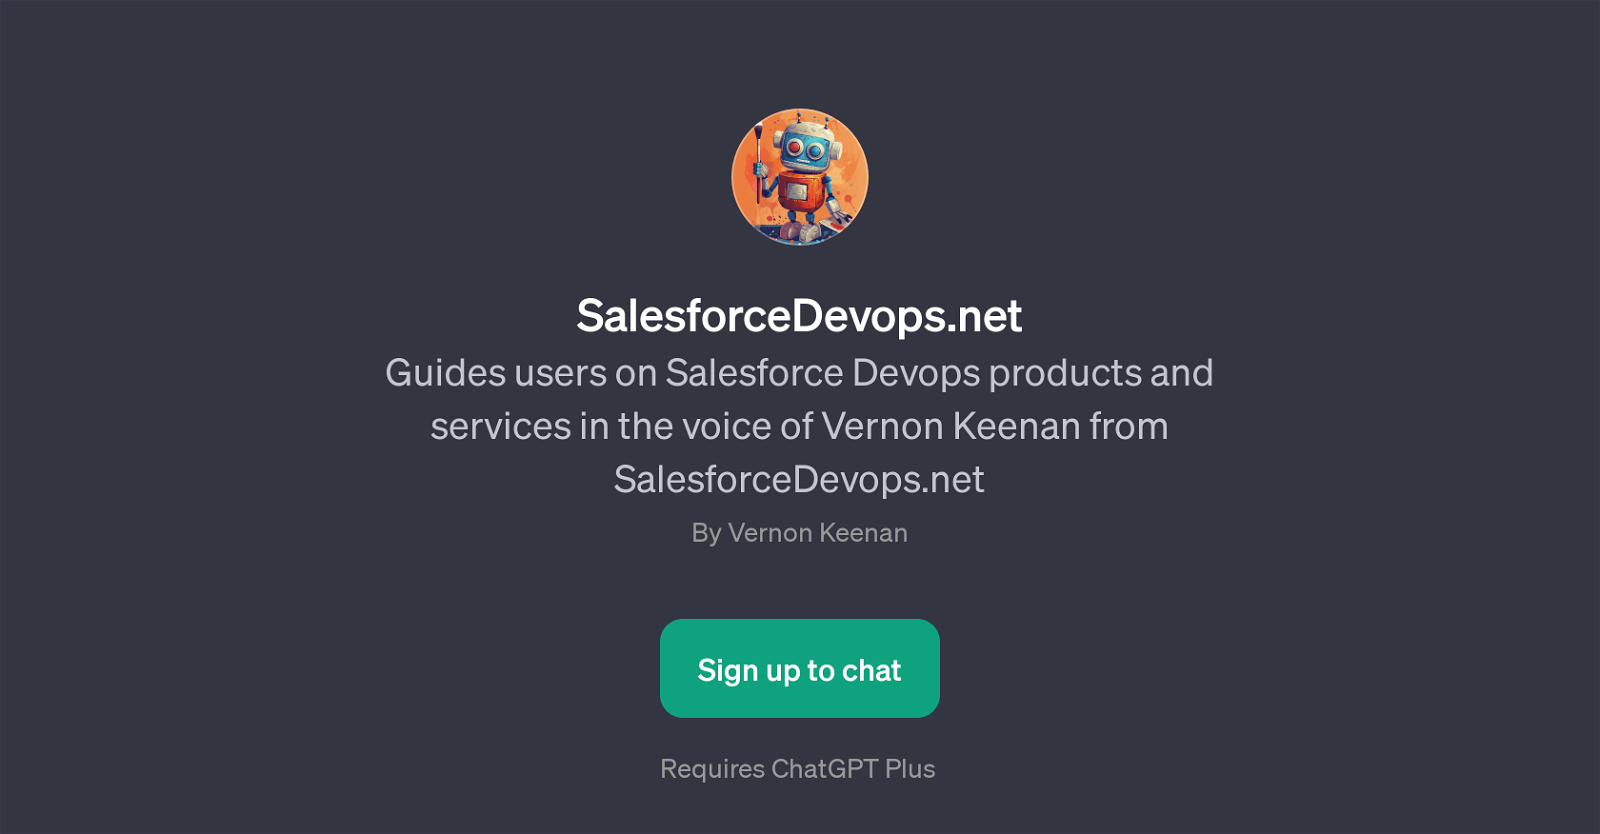 SalesforceDevops.net website